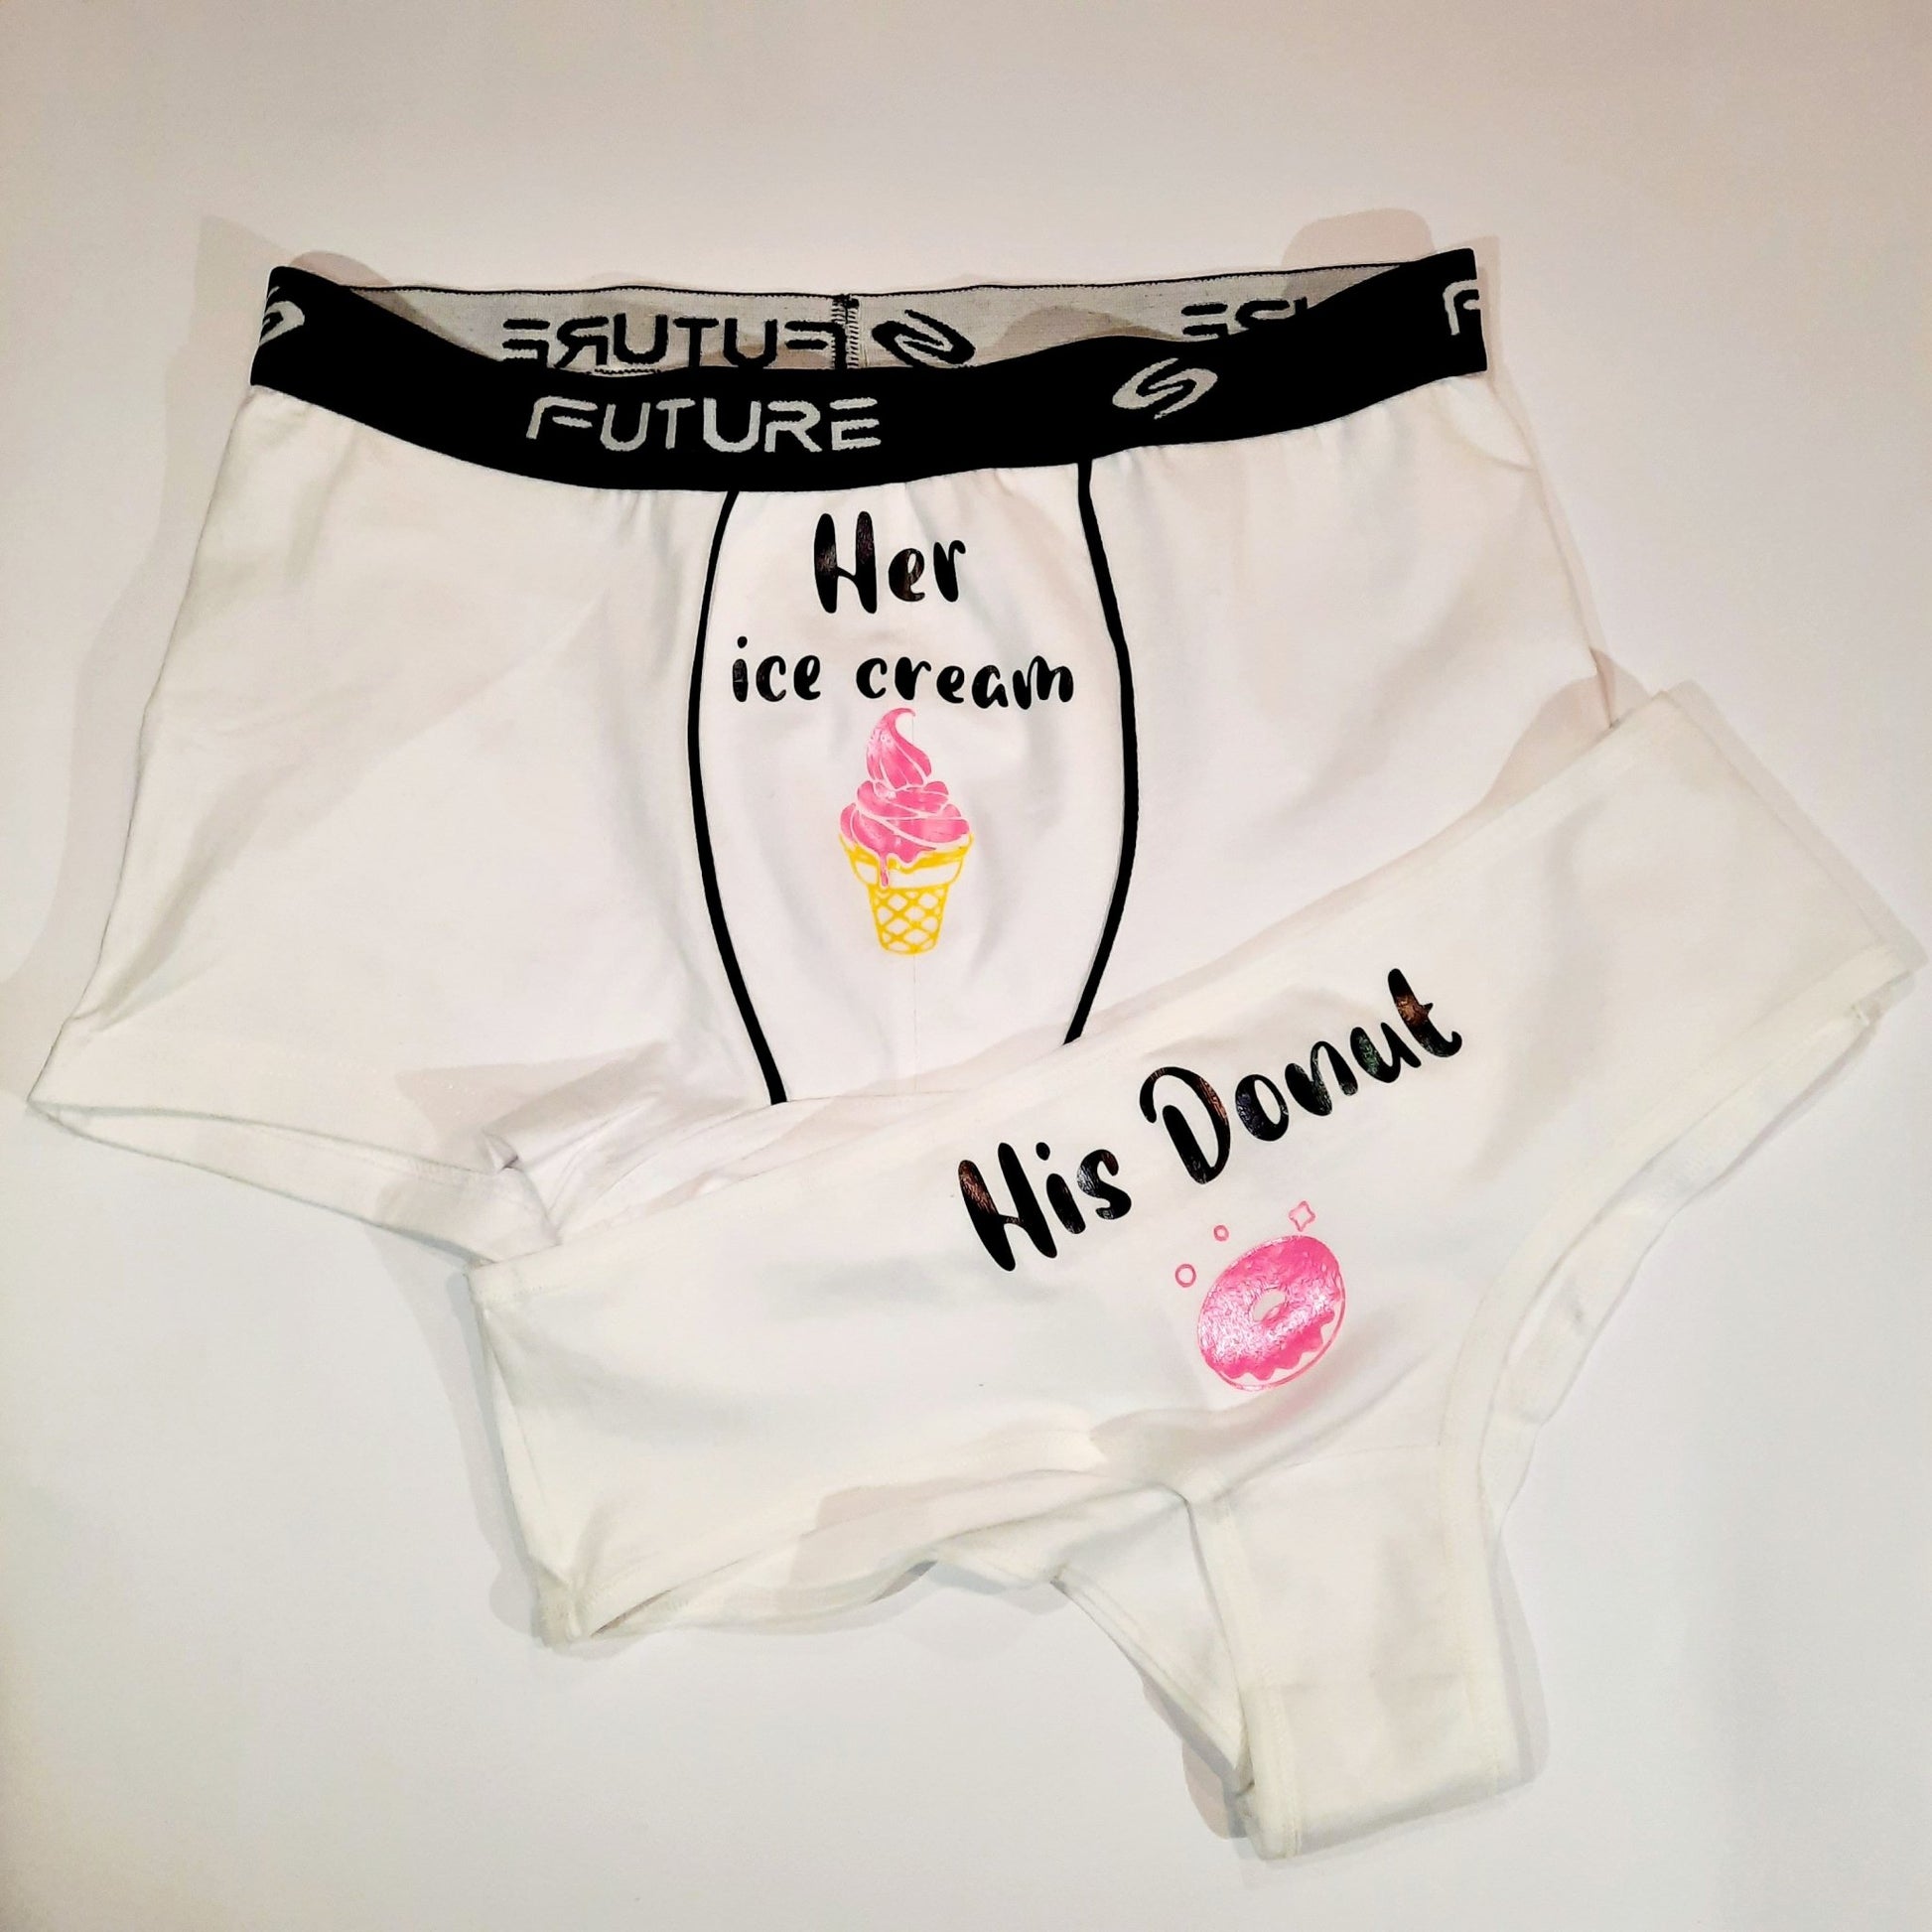 Couple underwear - Donut Ice Cream - Etba3lly